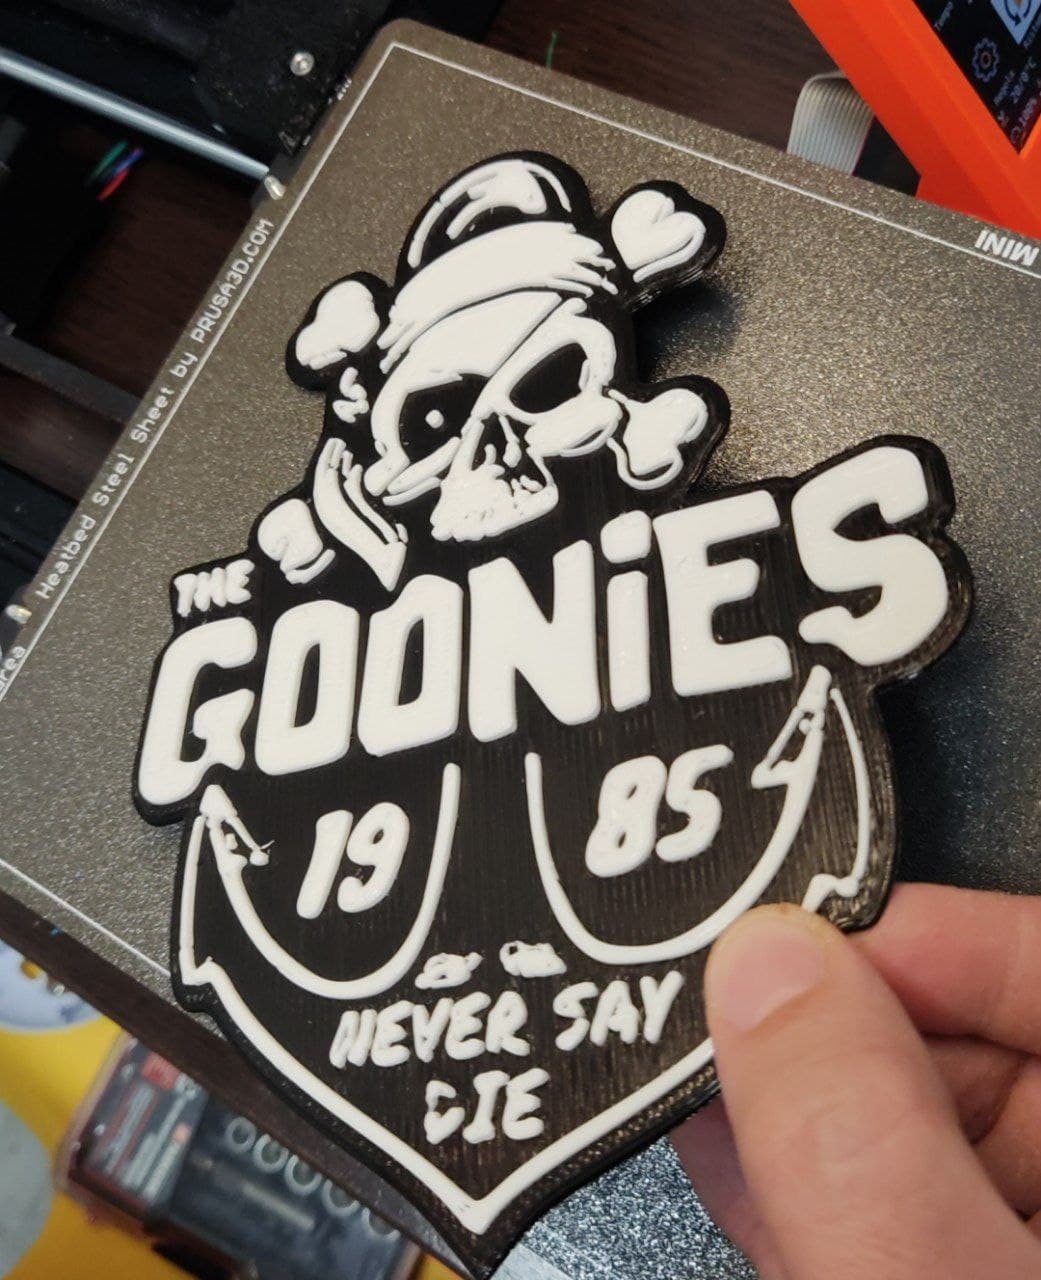 Goonies Logo